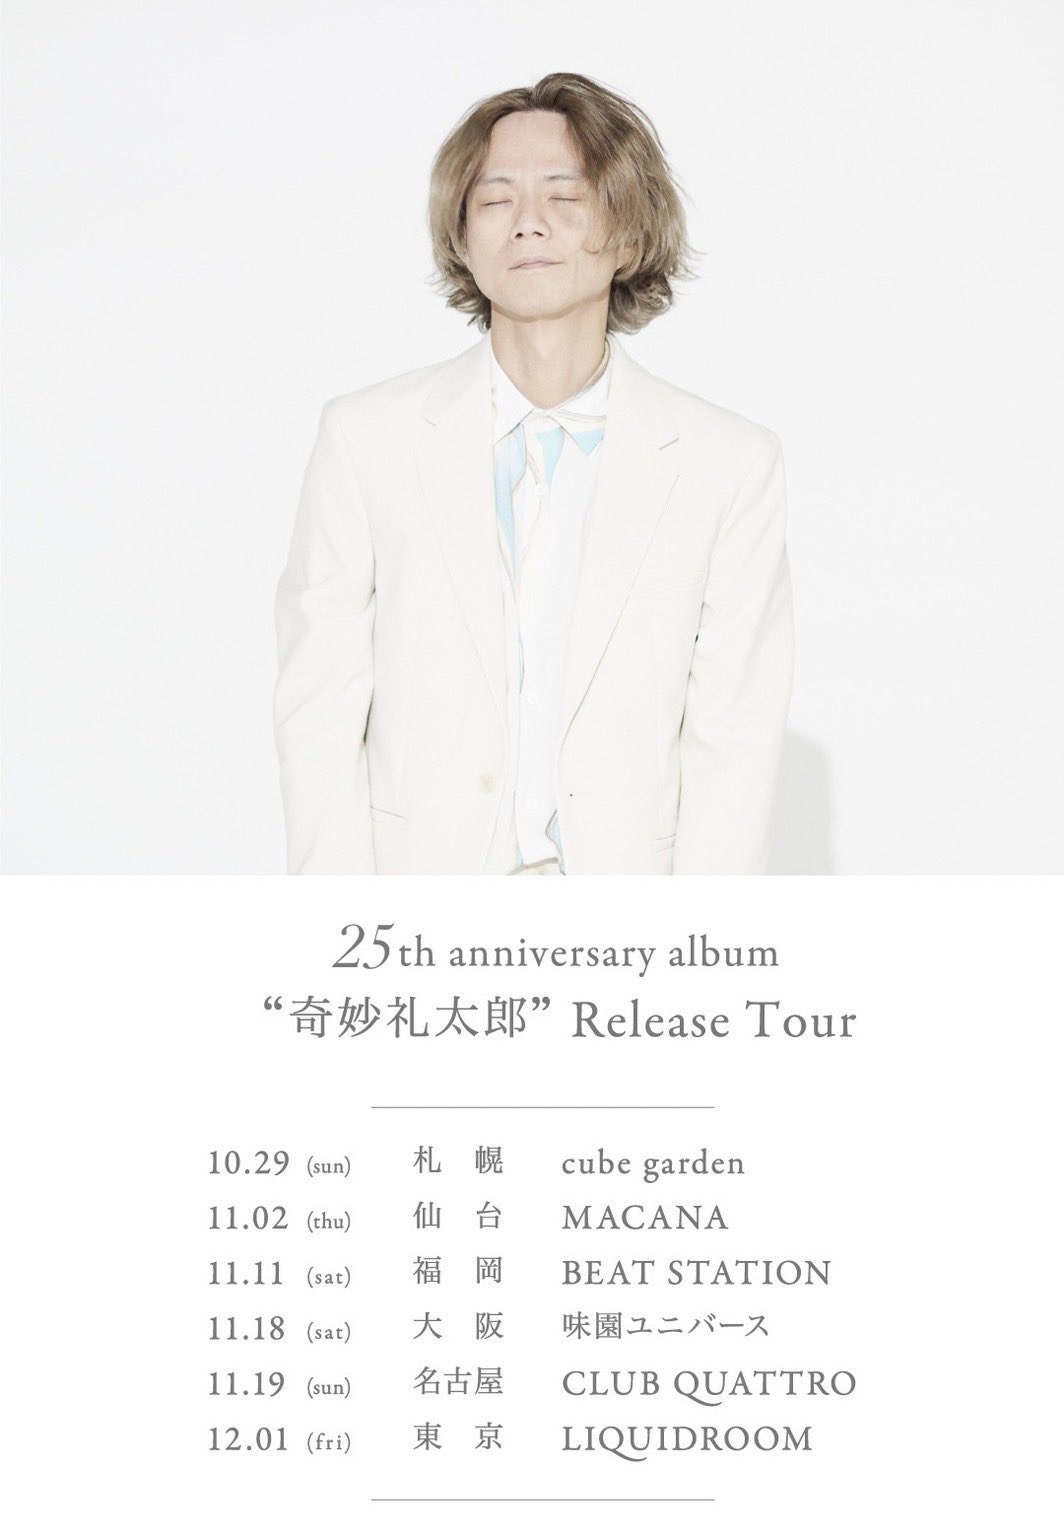 奇妙礼太郎 25th Anniversary Album「奇妙礼太郎」Release Tour